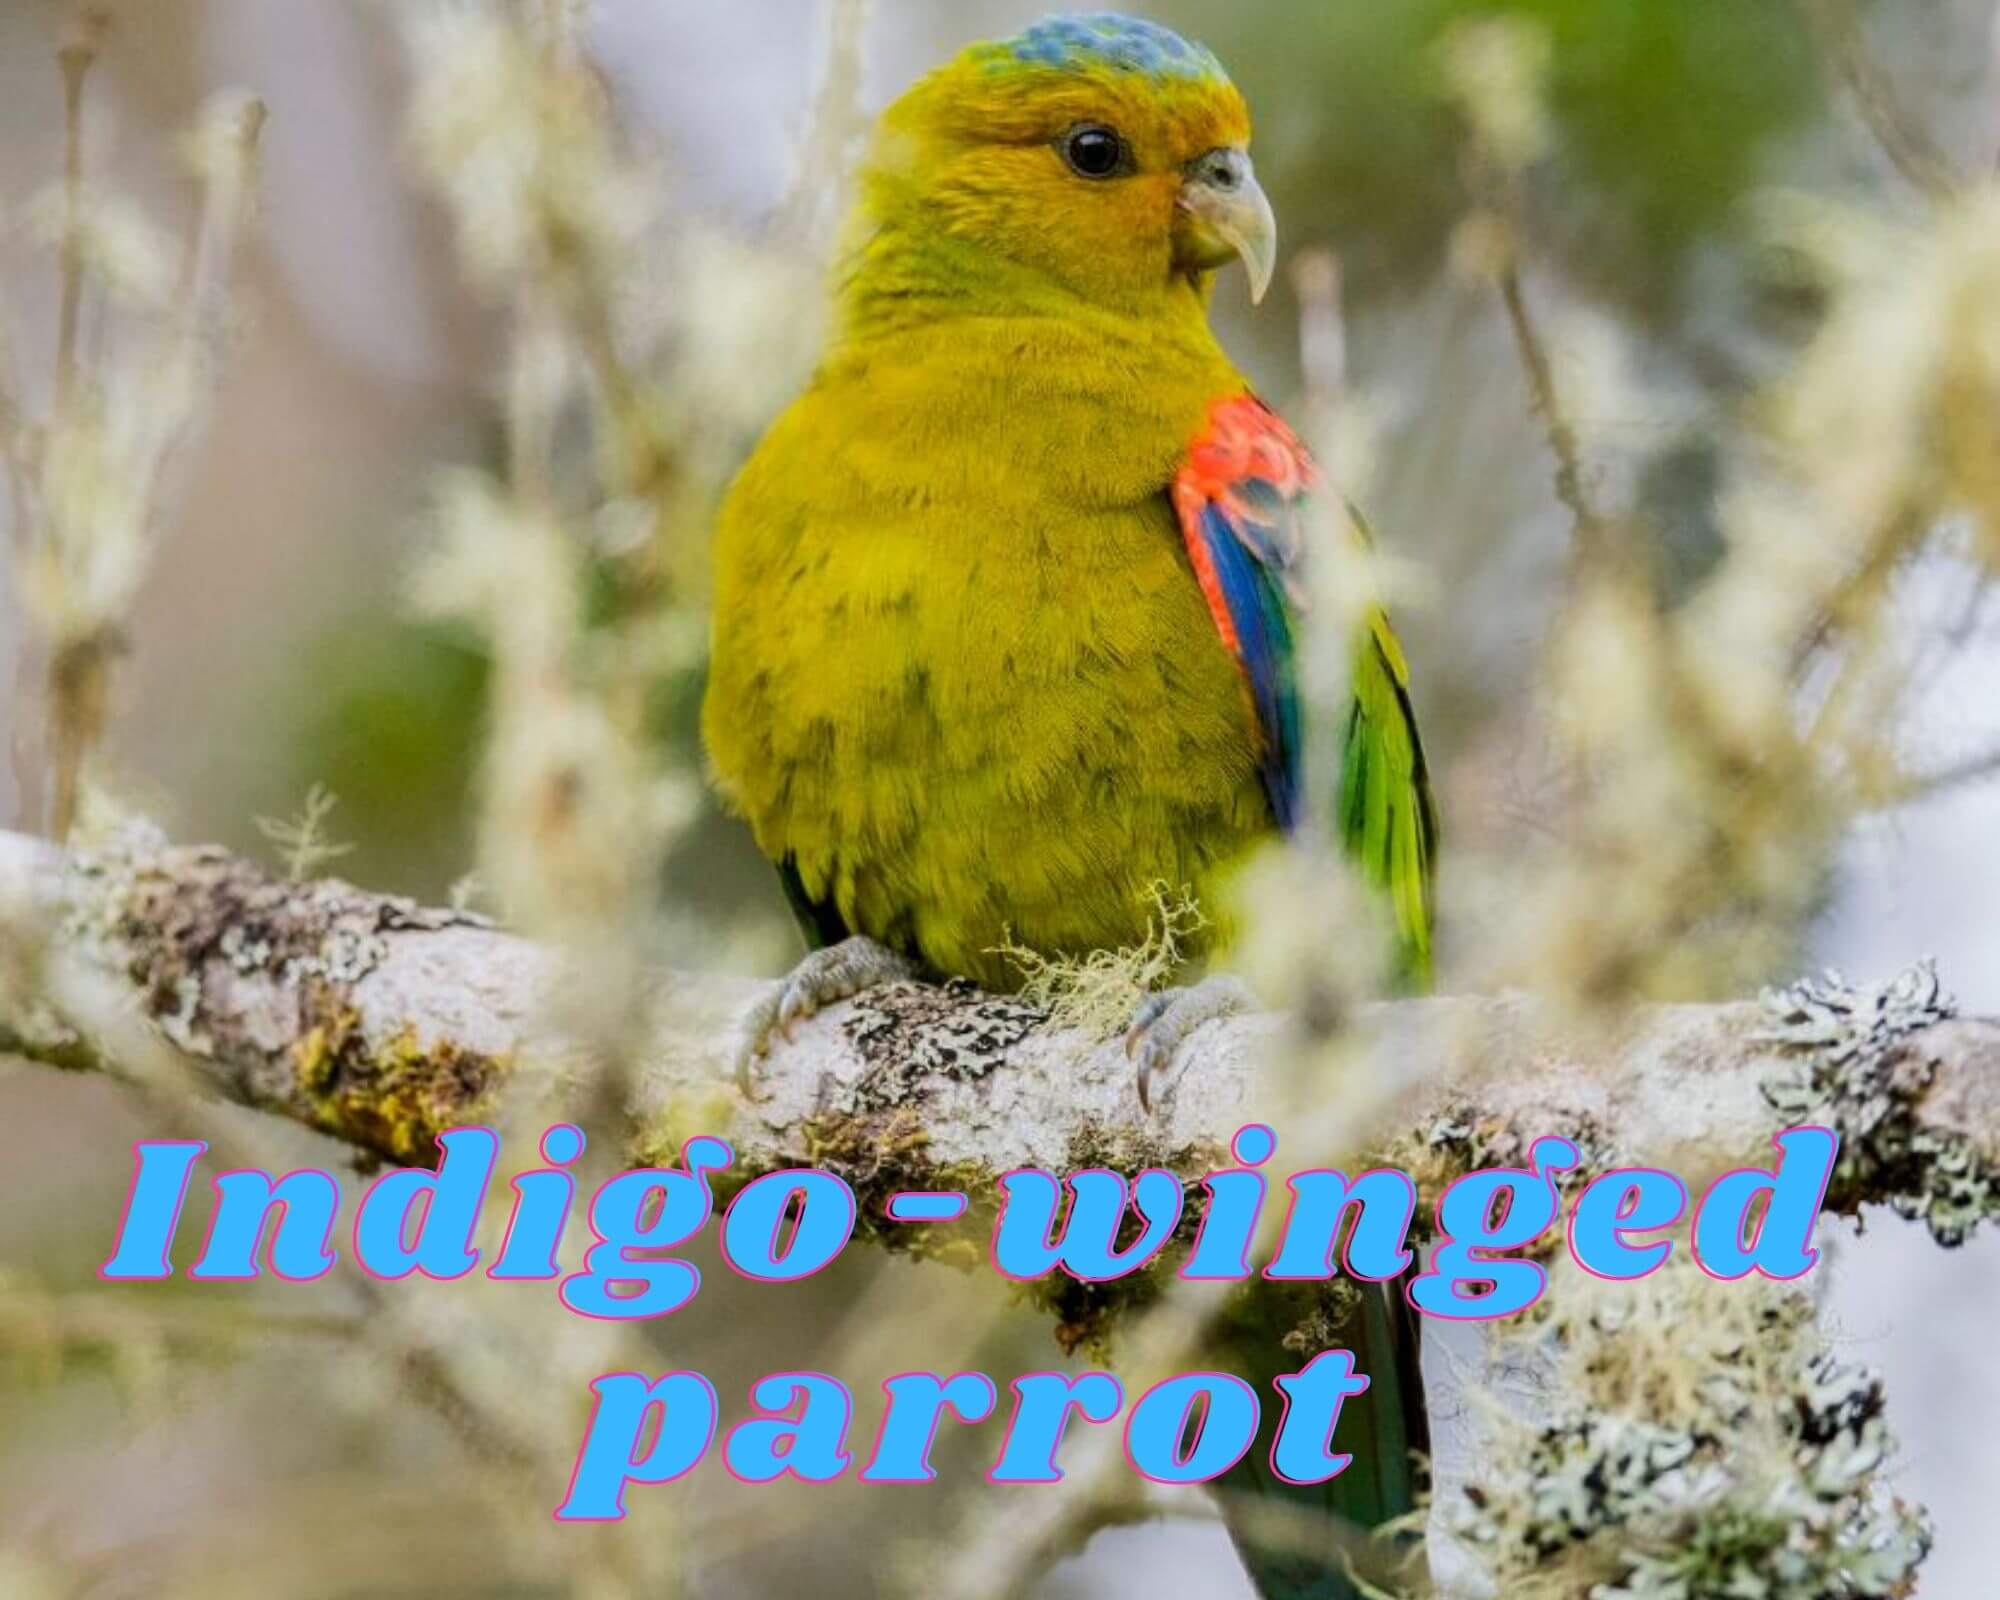 Indigo-winged Parrots